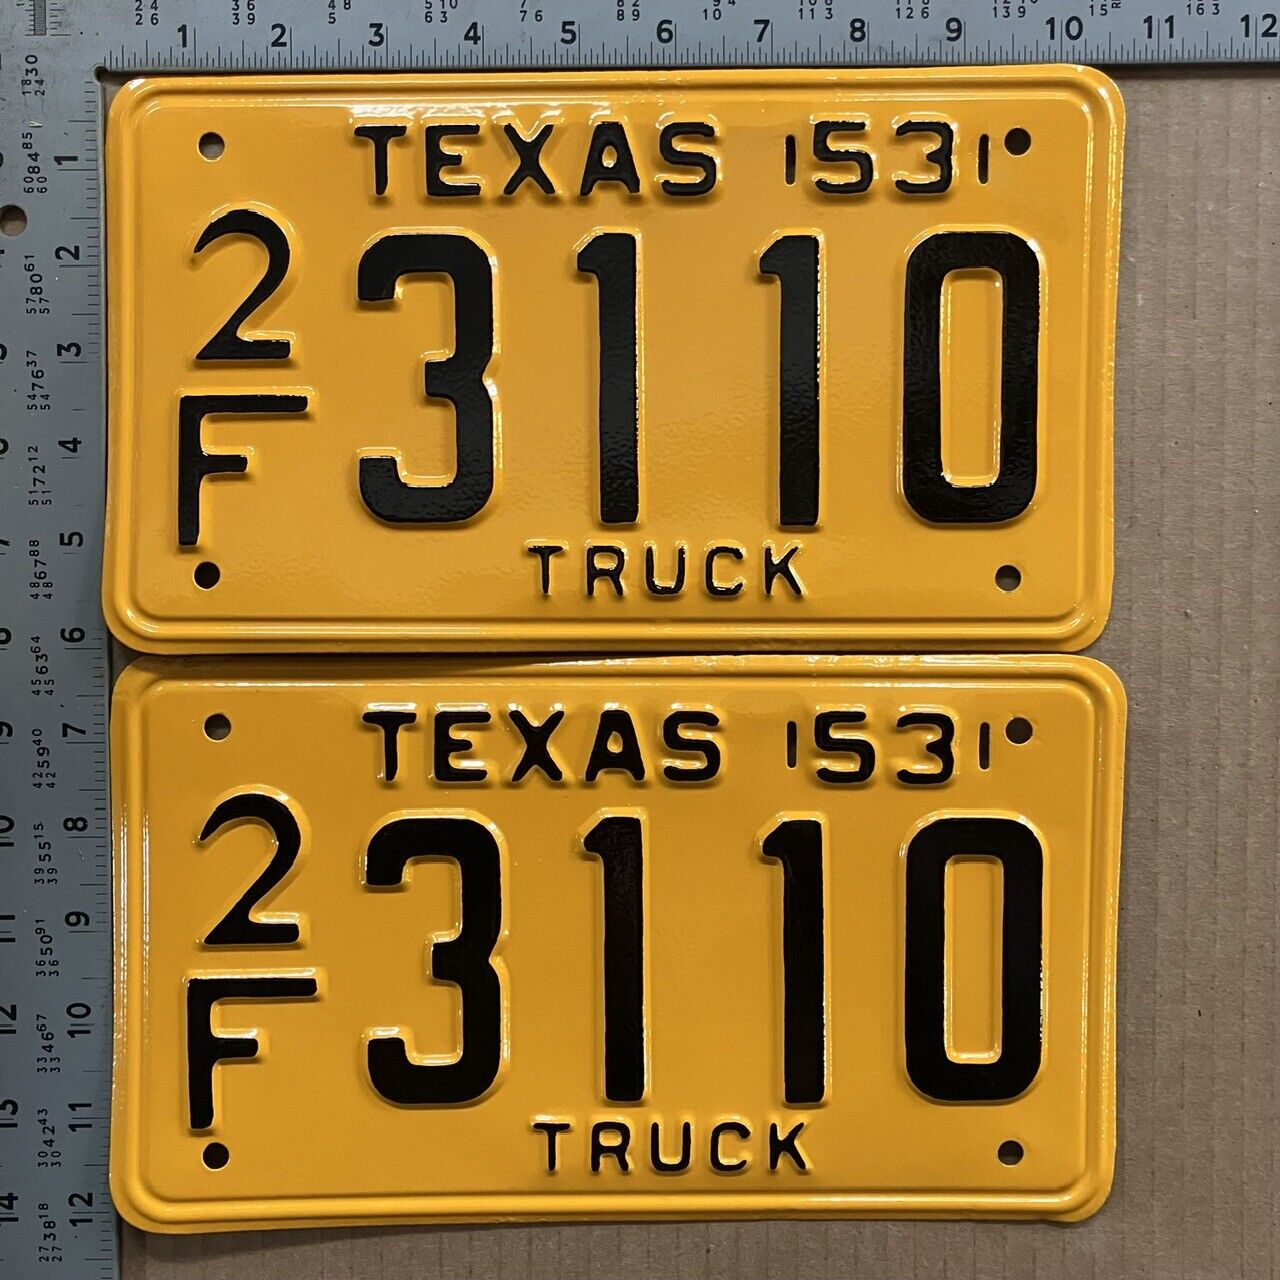 1953 Texas truck license plate pair 2F 3110 YOM DMV Chevy 3100 13637